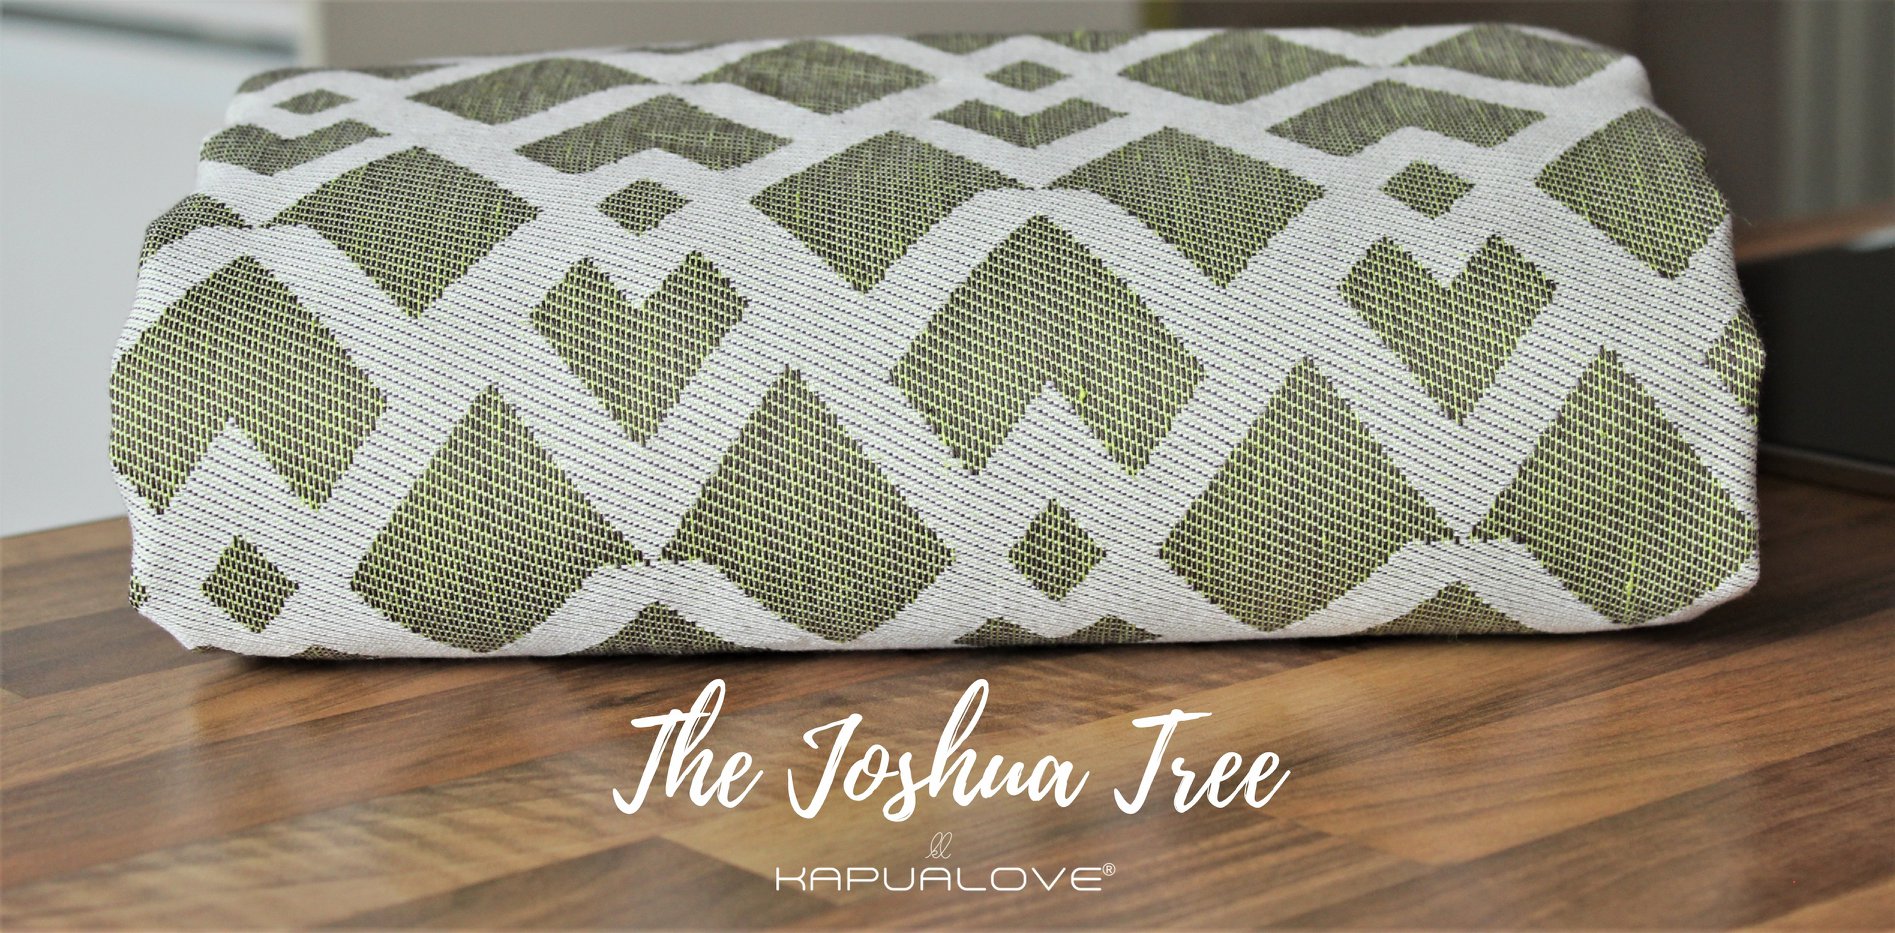 KAPUALOVE ENGELHERZ - The Joshua Tree Wrap (linen) Image